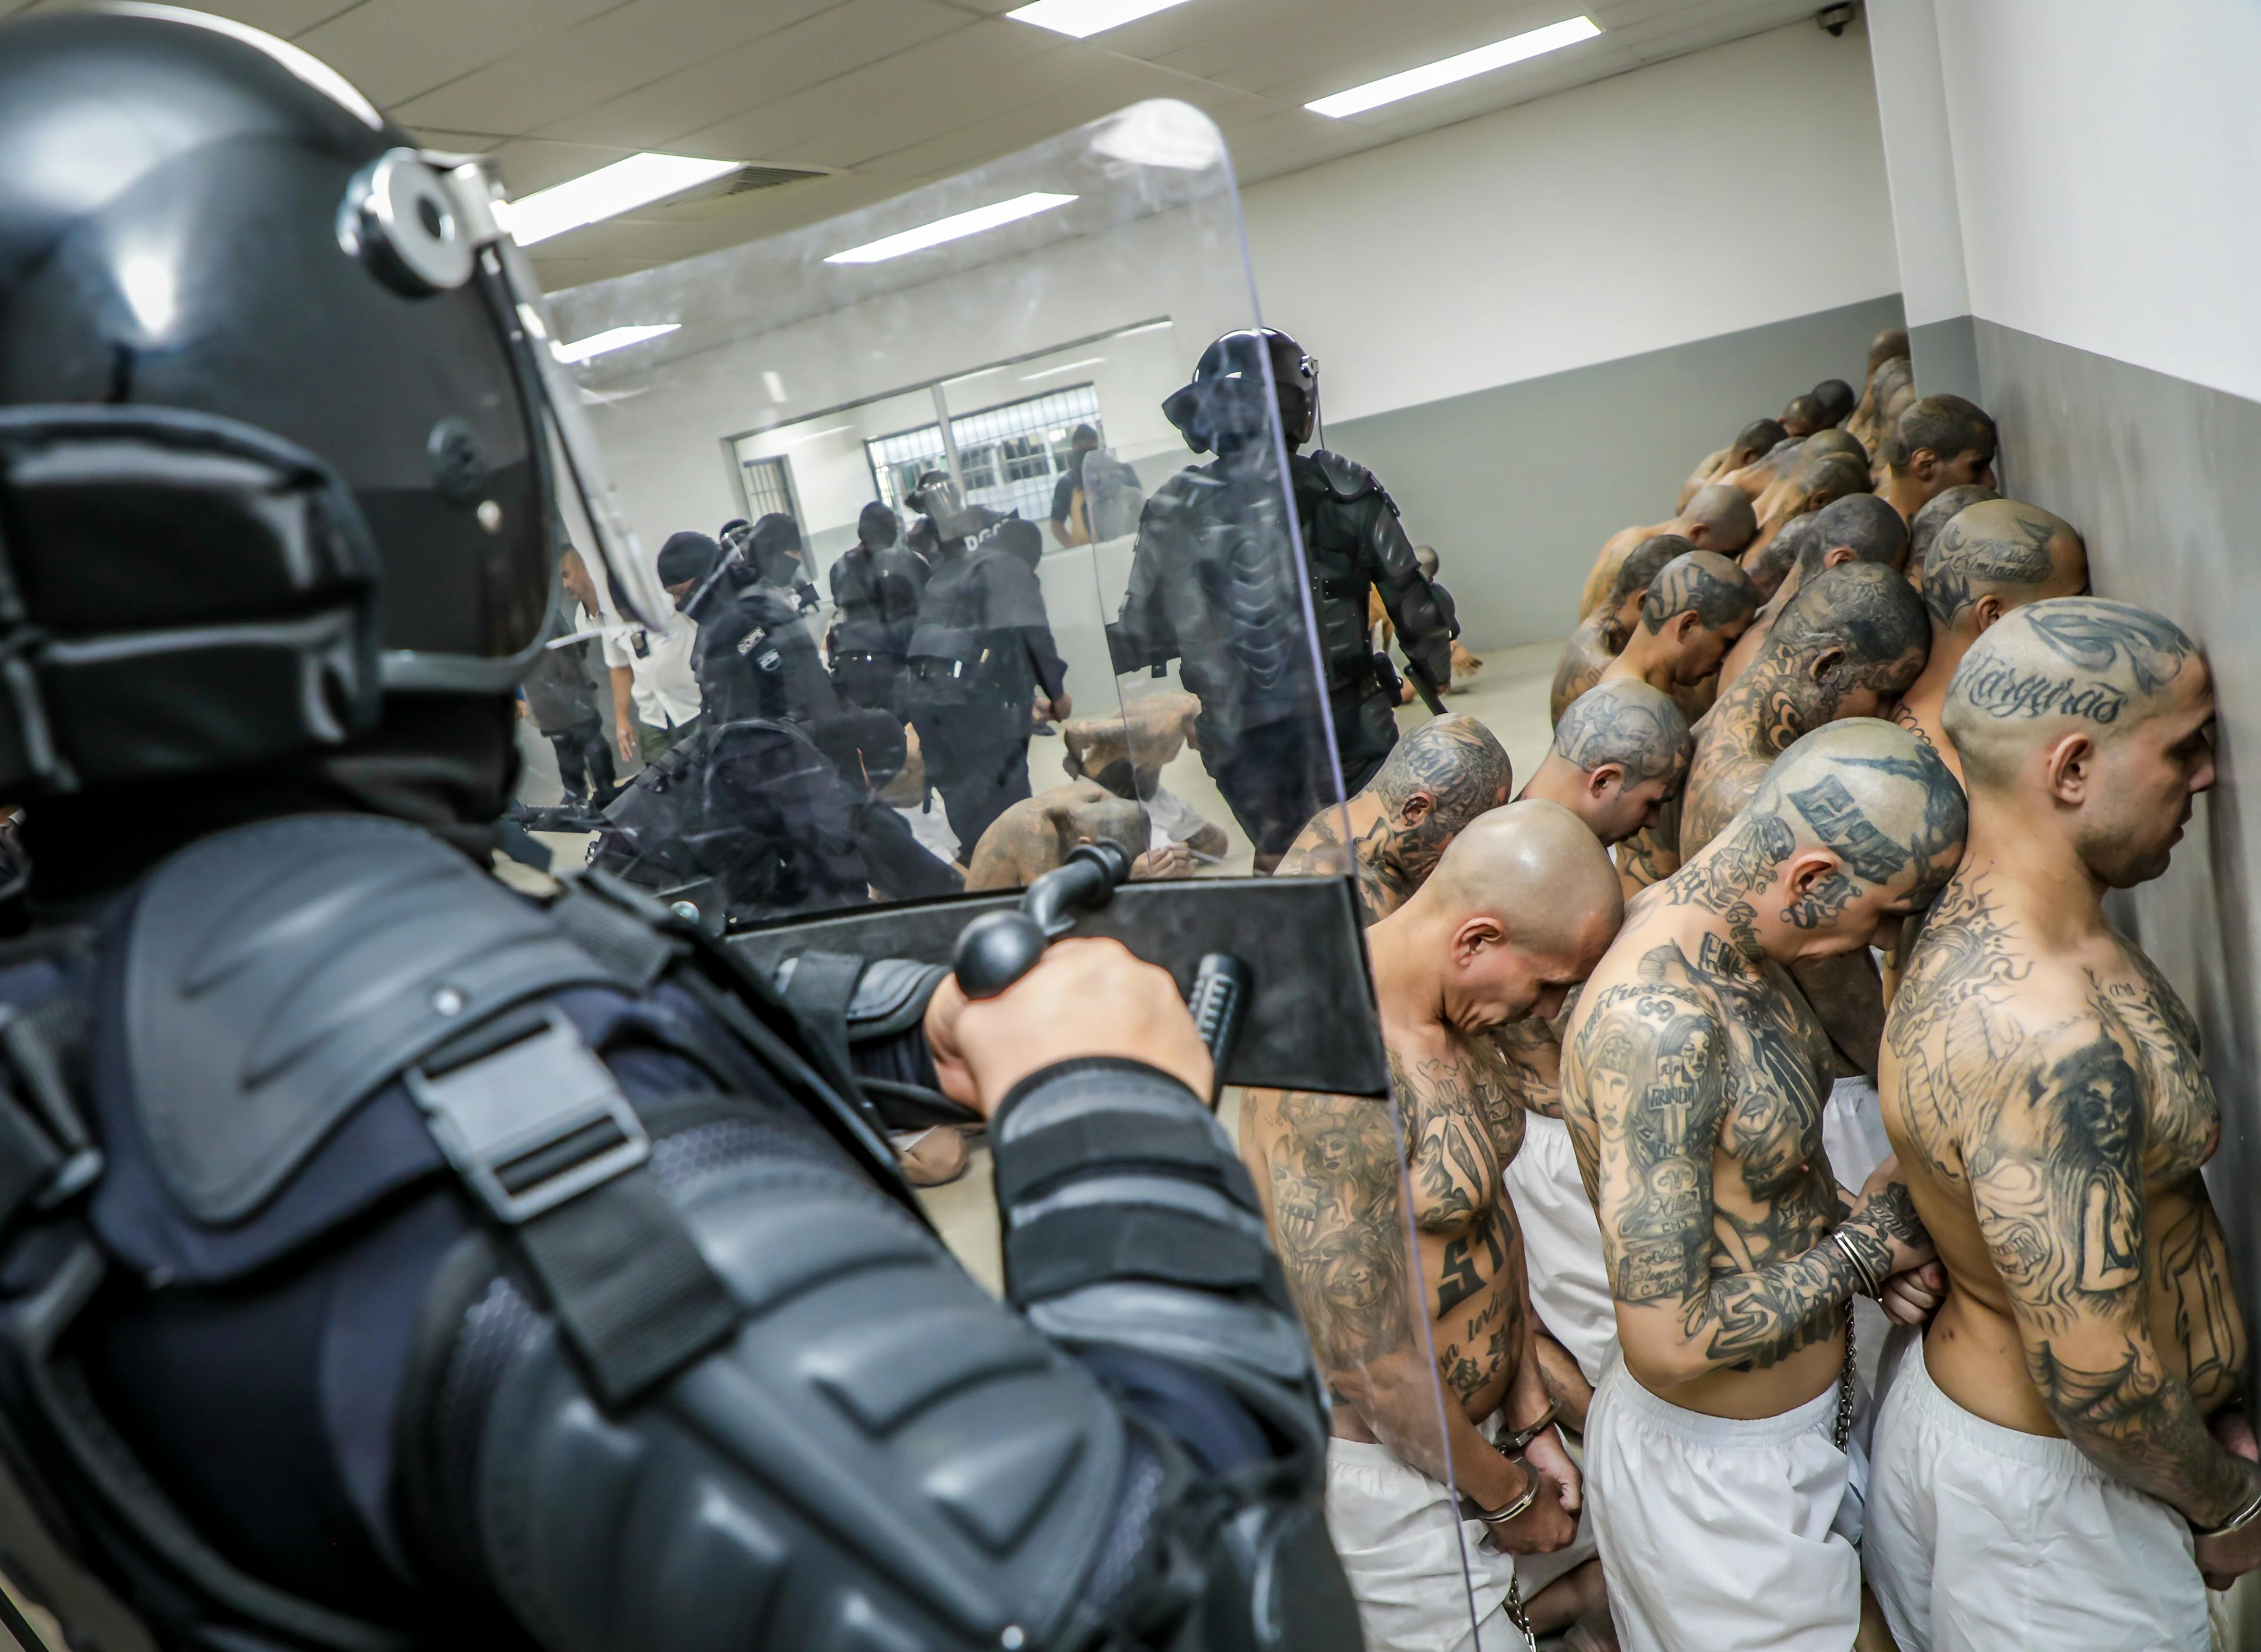 El Salvador’s Prison Crisis interactive documentary cover image